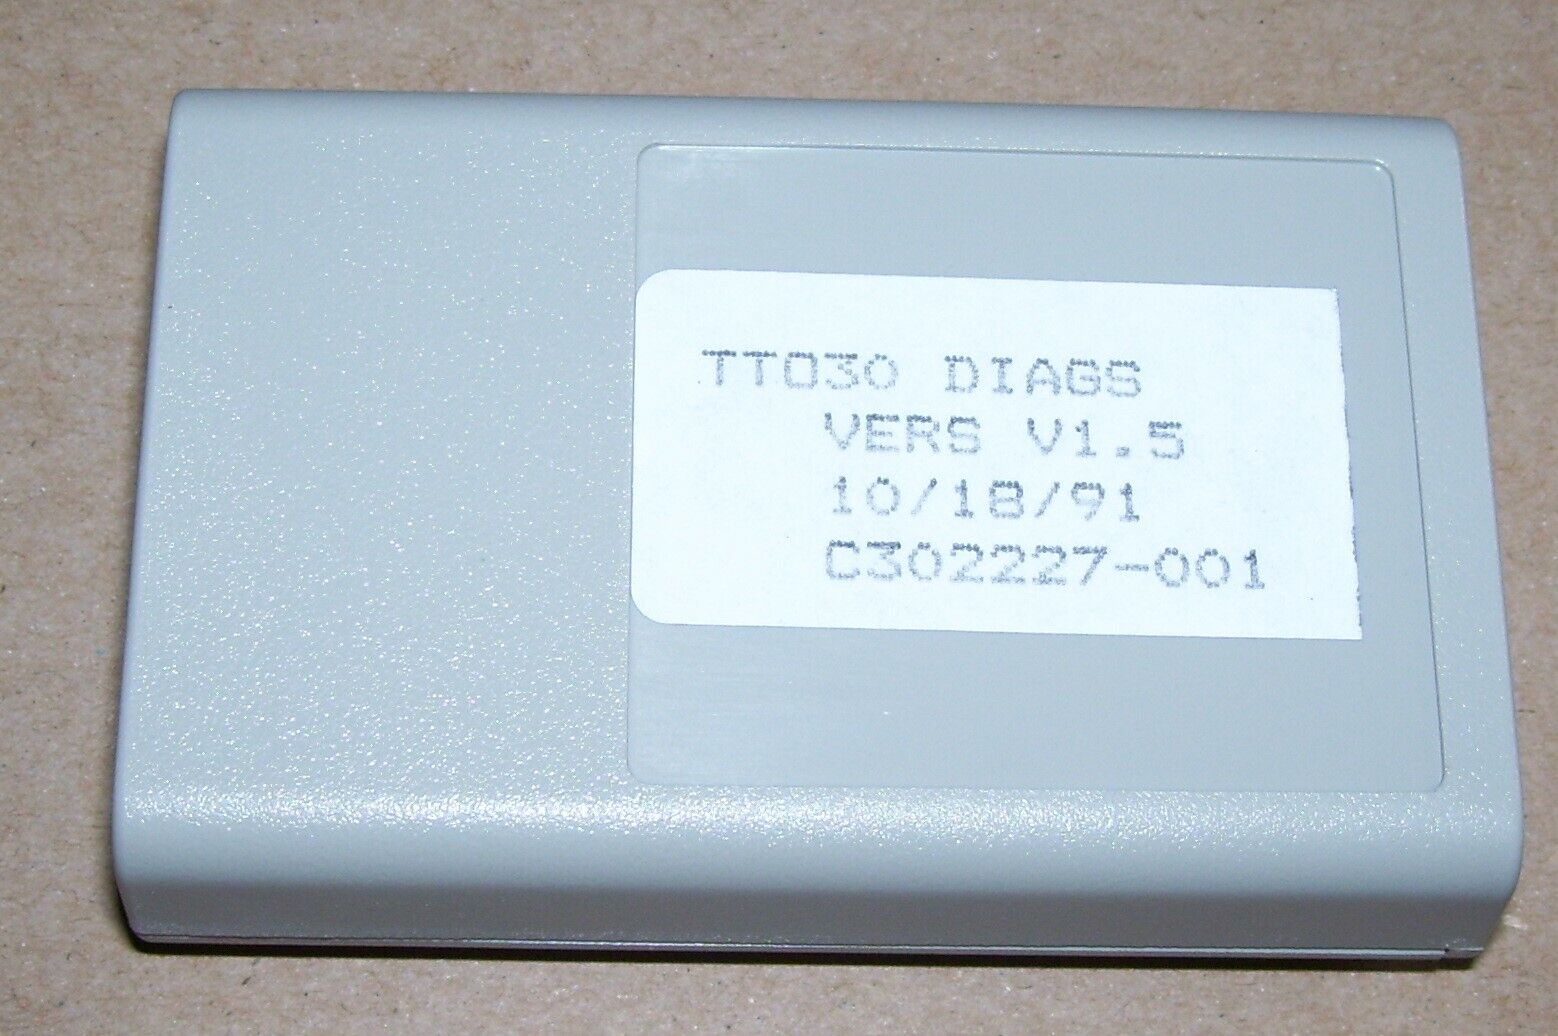 NEW 1991 Atari TT 030 Computer Diagnostic Test Cartridge Ver 1.5 C302227-001